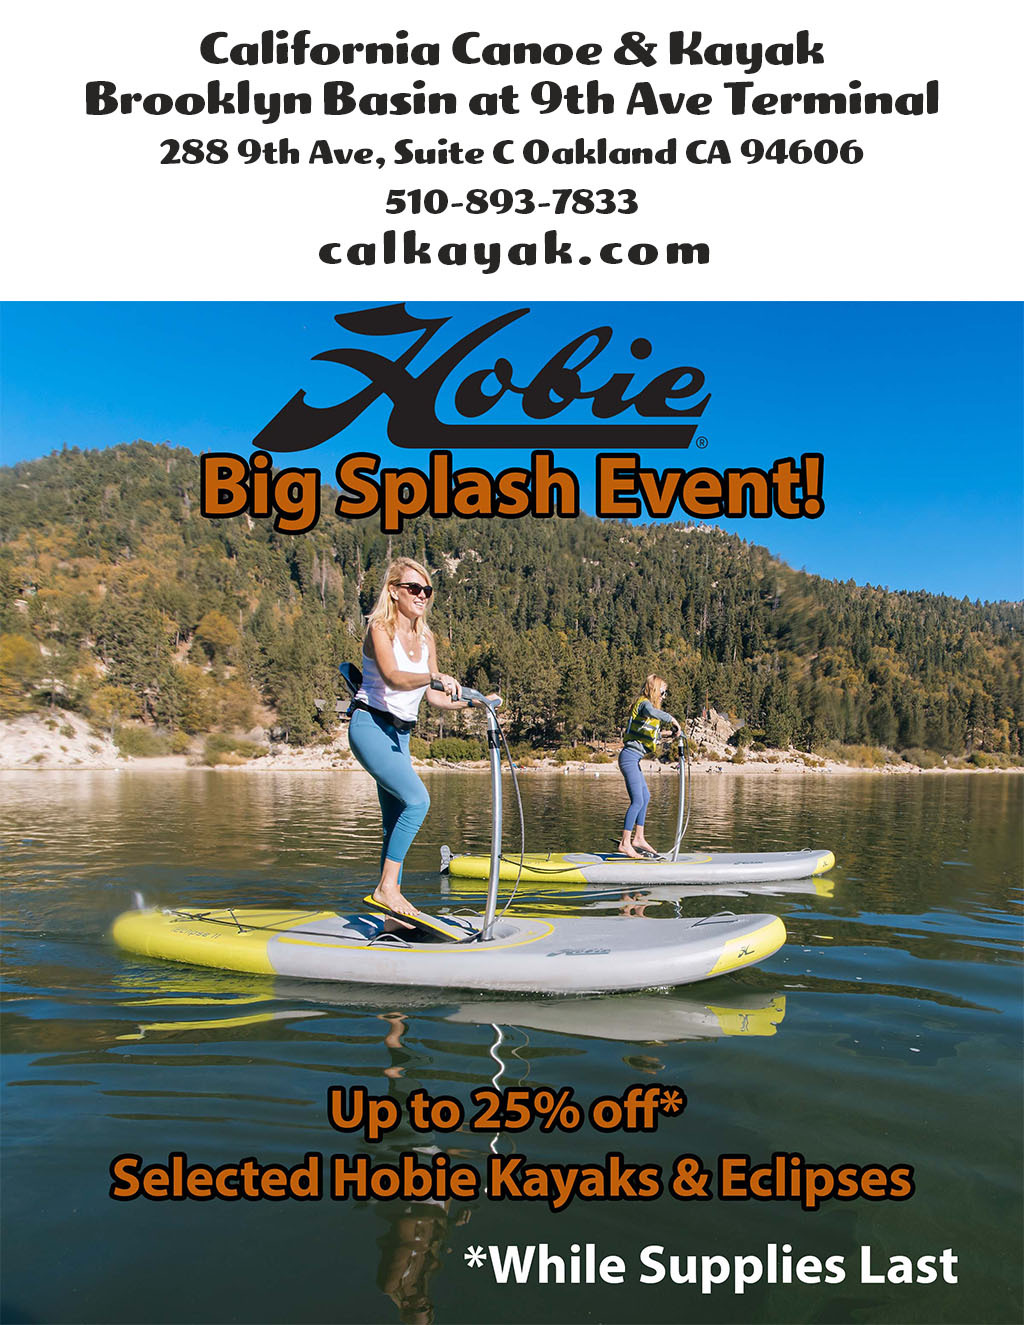 California Canoe   Kayak Oakland California Canoe   Kayak s Big Splash Event  promotion flier on Digifli com